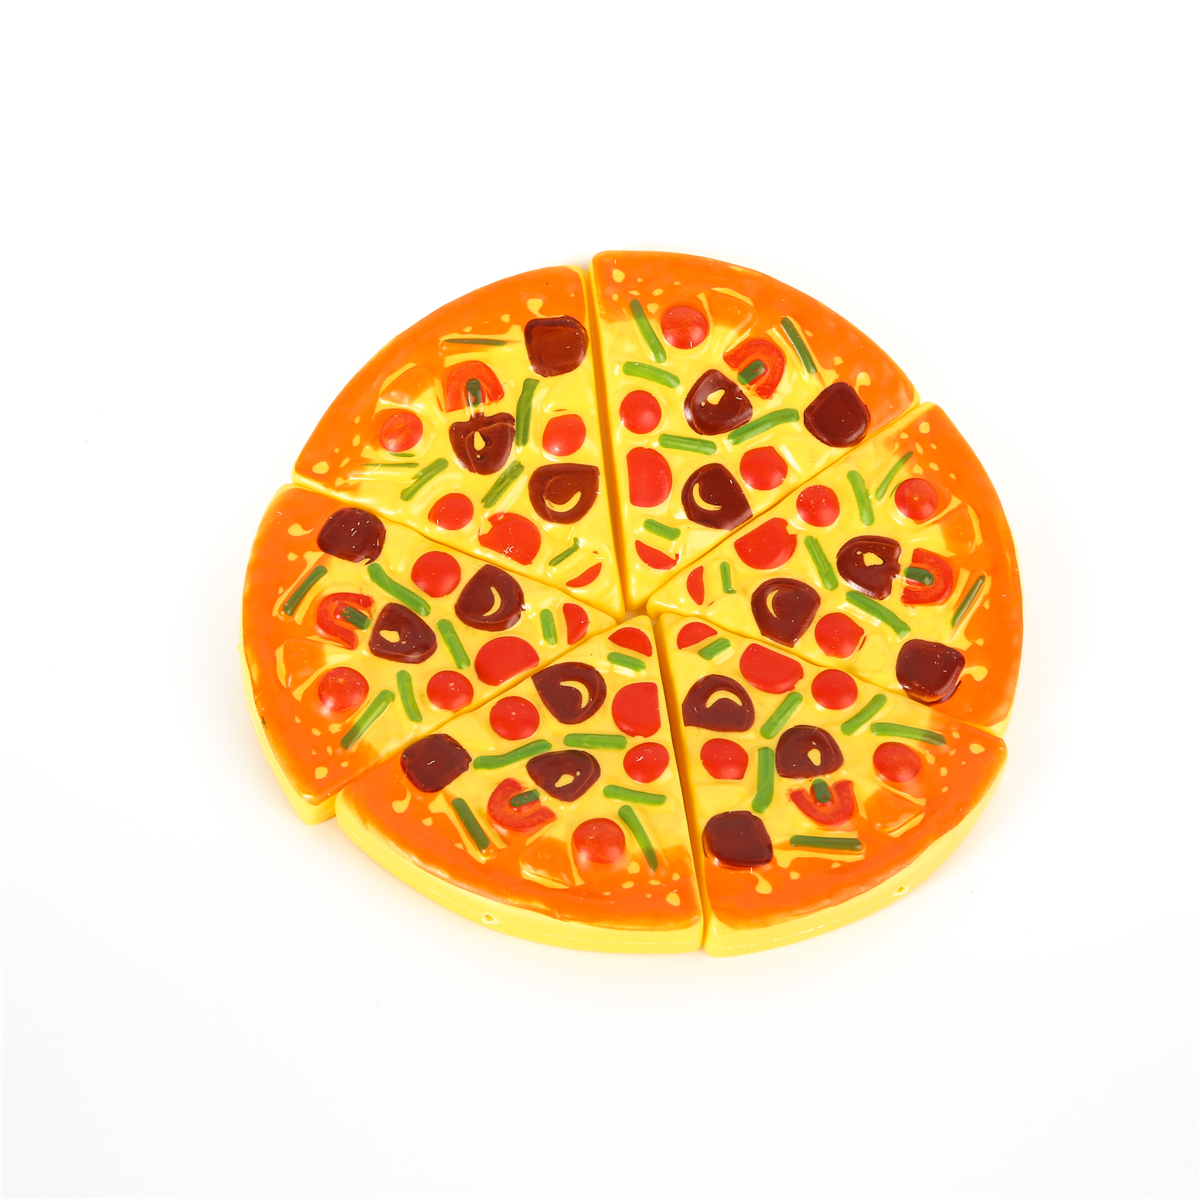 Seyurigaoka 6Pcs Kids Toy Pretend Role Play Kitchen Pizza Food Cutting Sets Children Gift - image 1 of 6